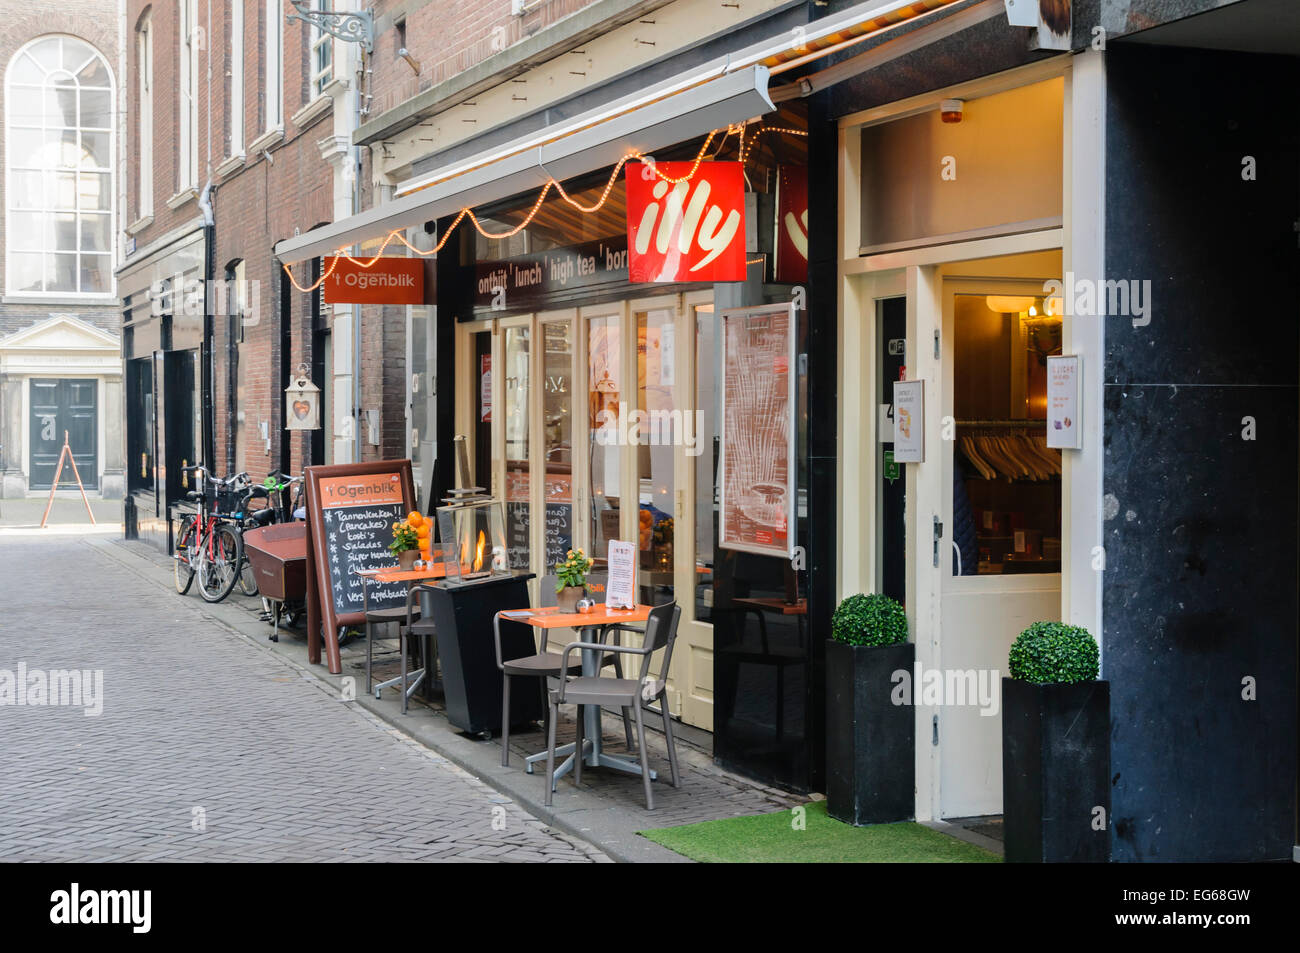  Cafe  in Den Haag  den Haag  Niederlande Stockfotografie 